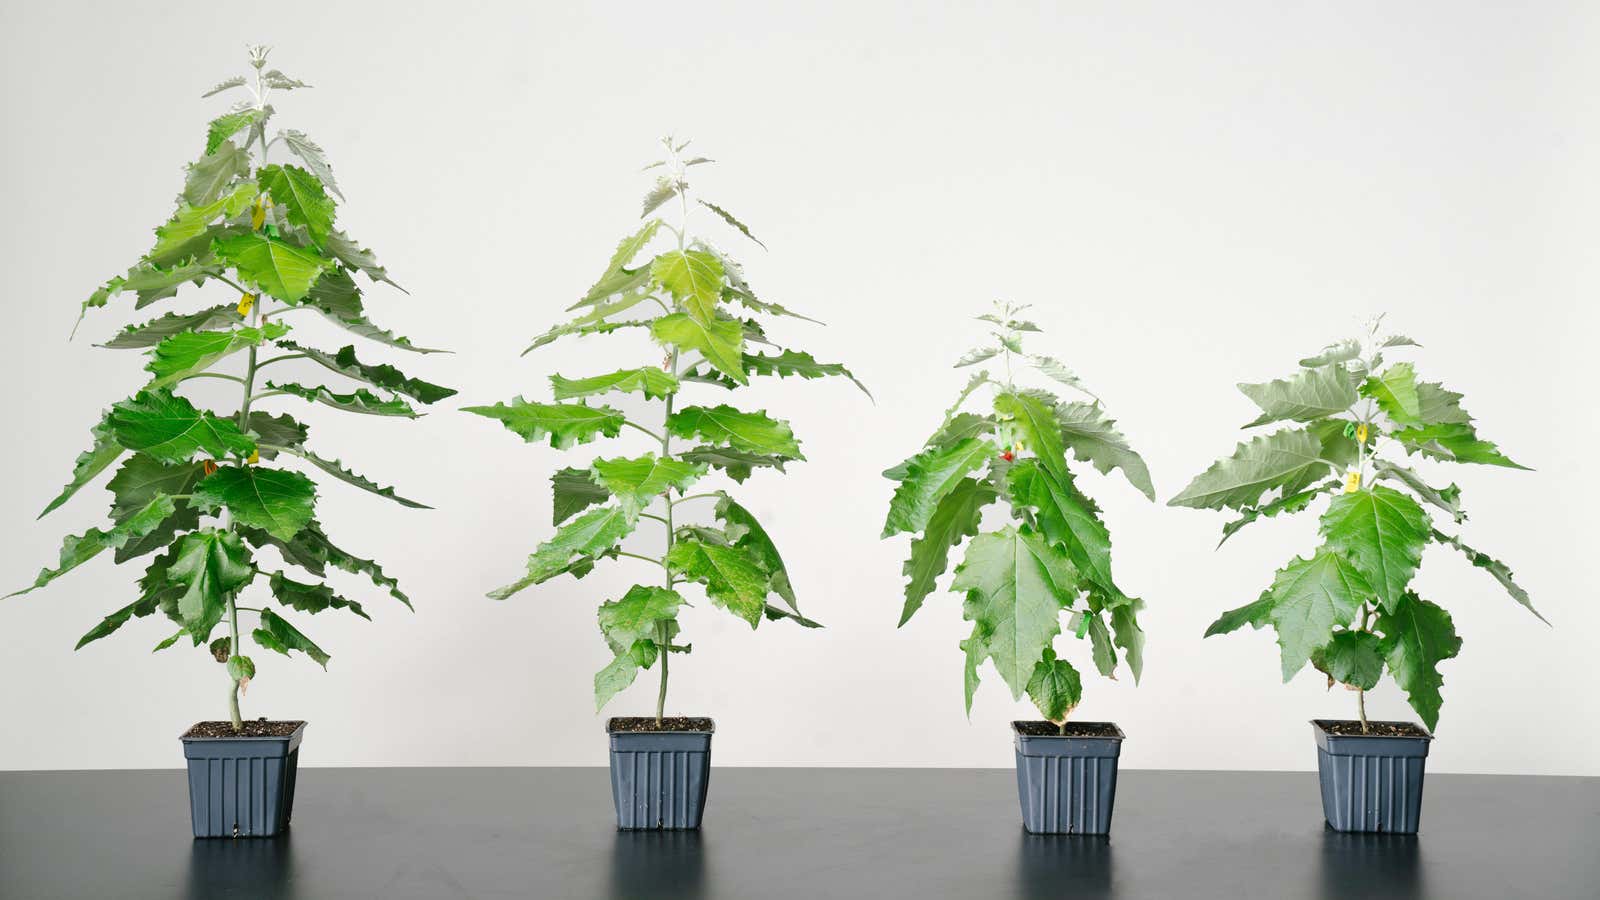 Genetically modified poplar trees, left, grow faster than regular poplars.